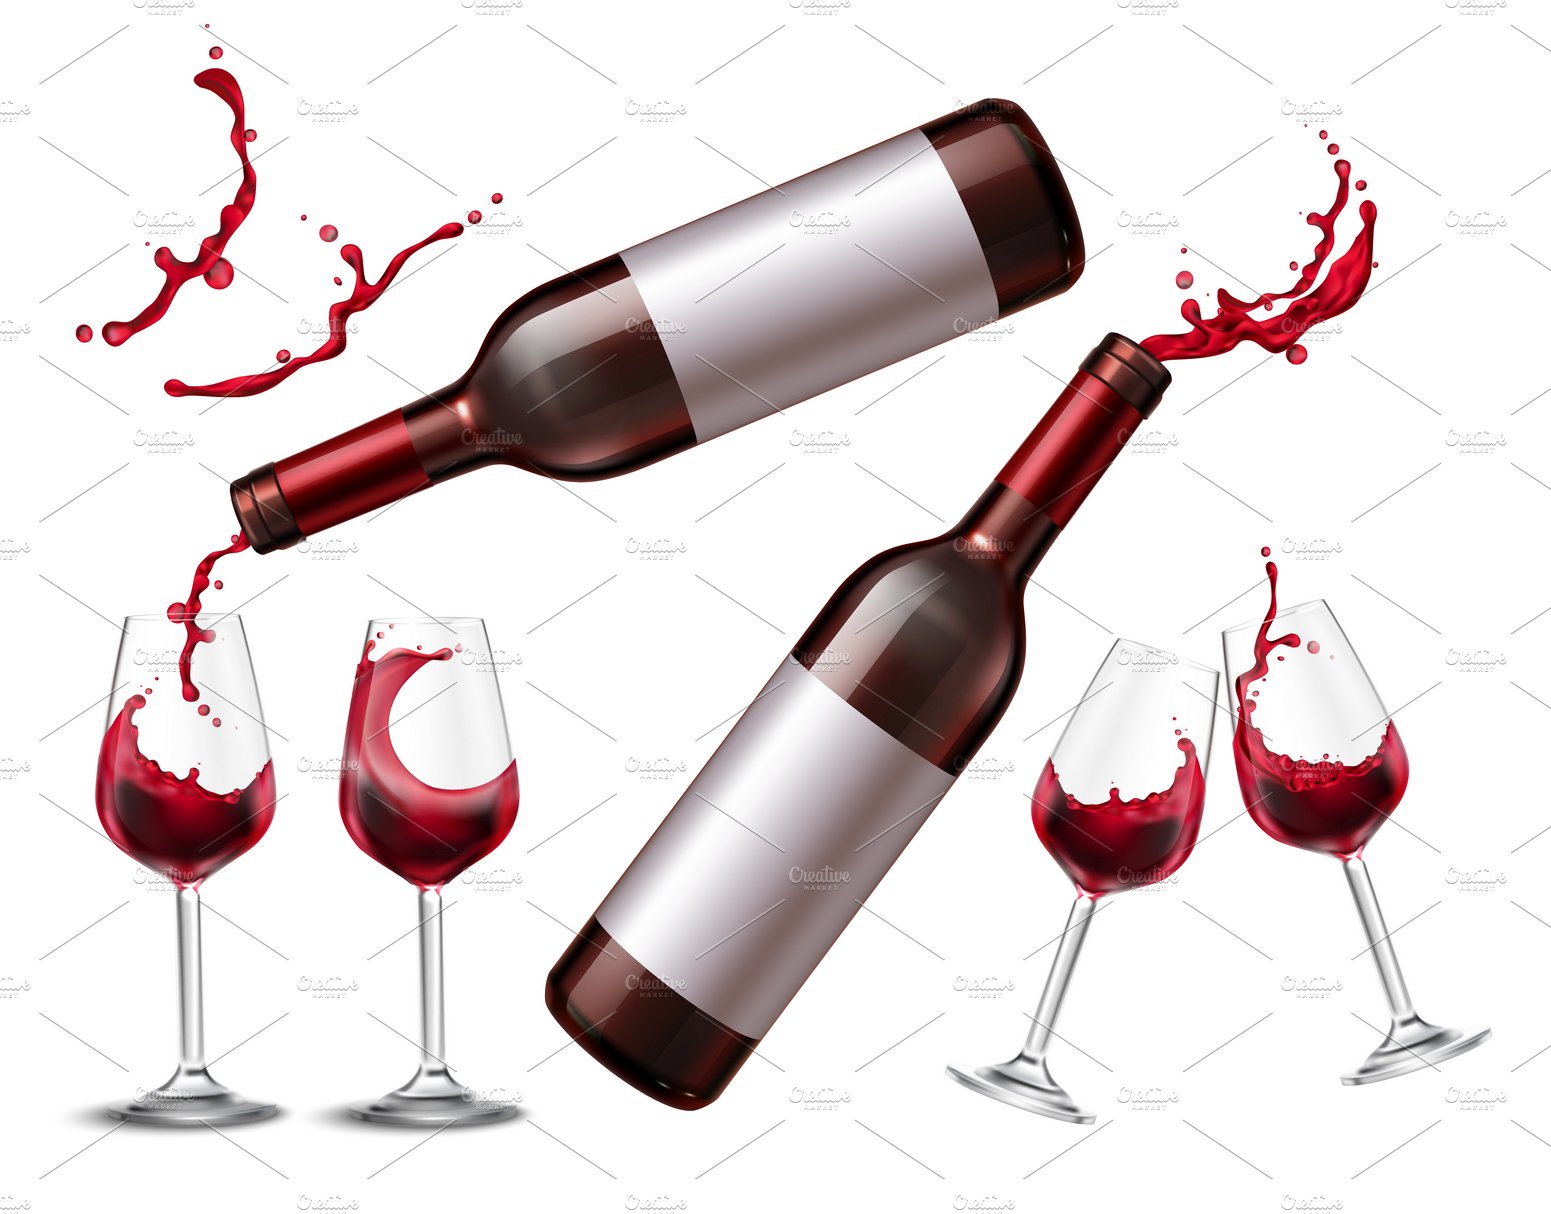 Red wine splash realistic set cover image.